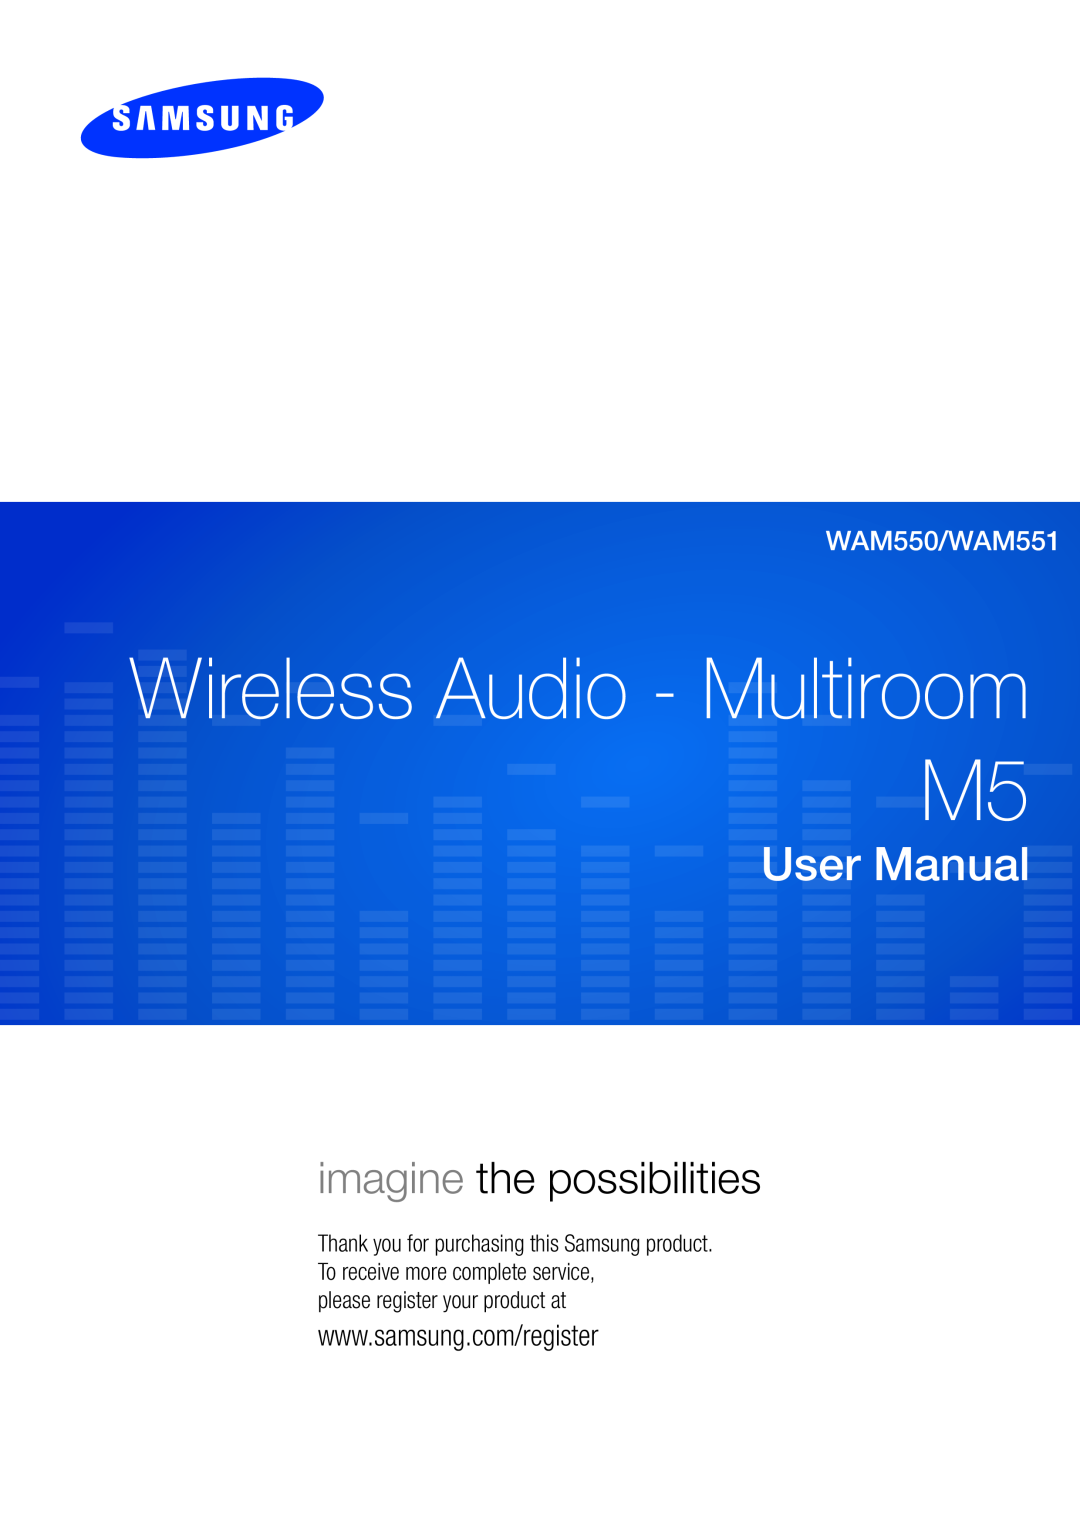 Samsung user manual Wireless Audio - Multiroom, User Manual, imagine the possibilities, WAM550/WAM551 